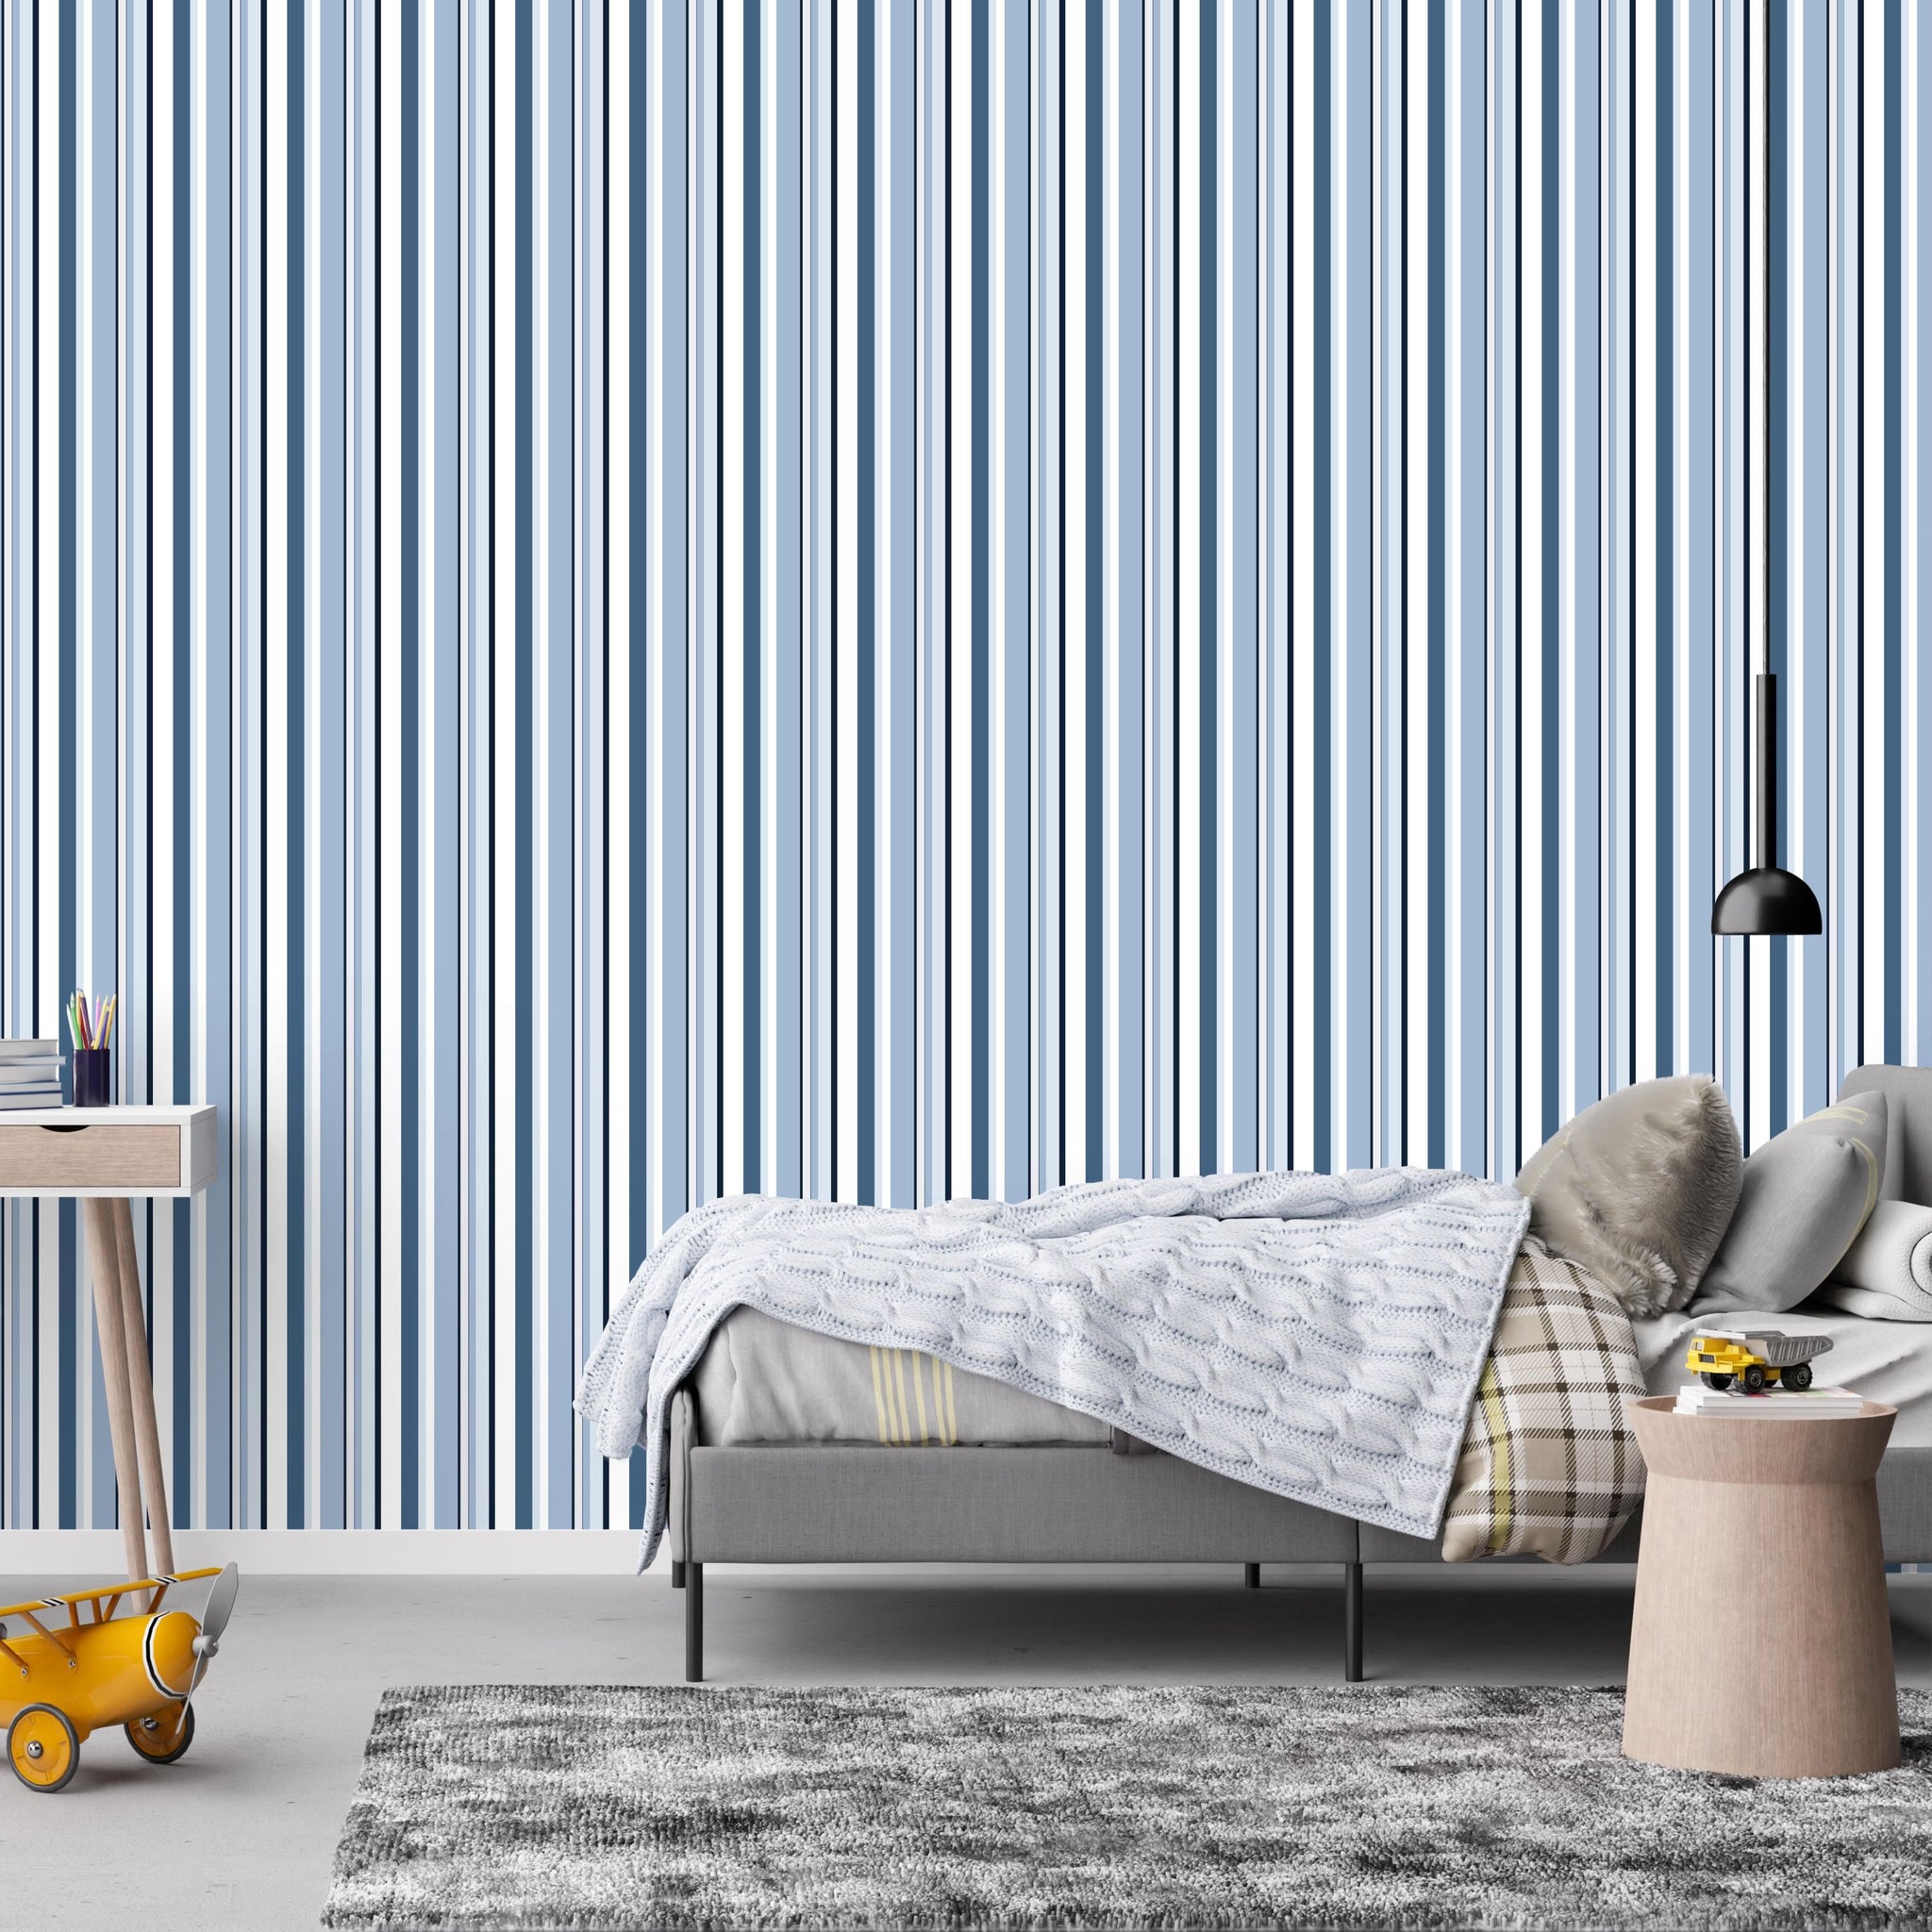 Blue Stripe Peel and Stick Wallpaper - Marine Stripes